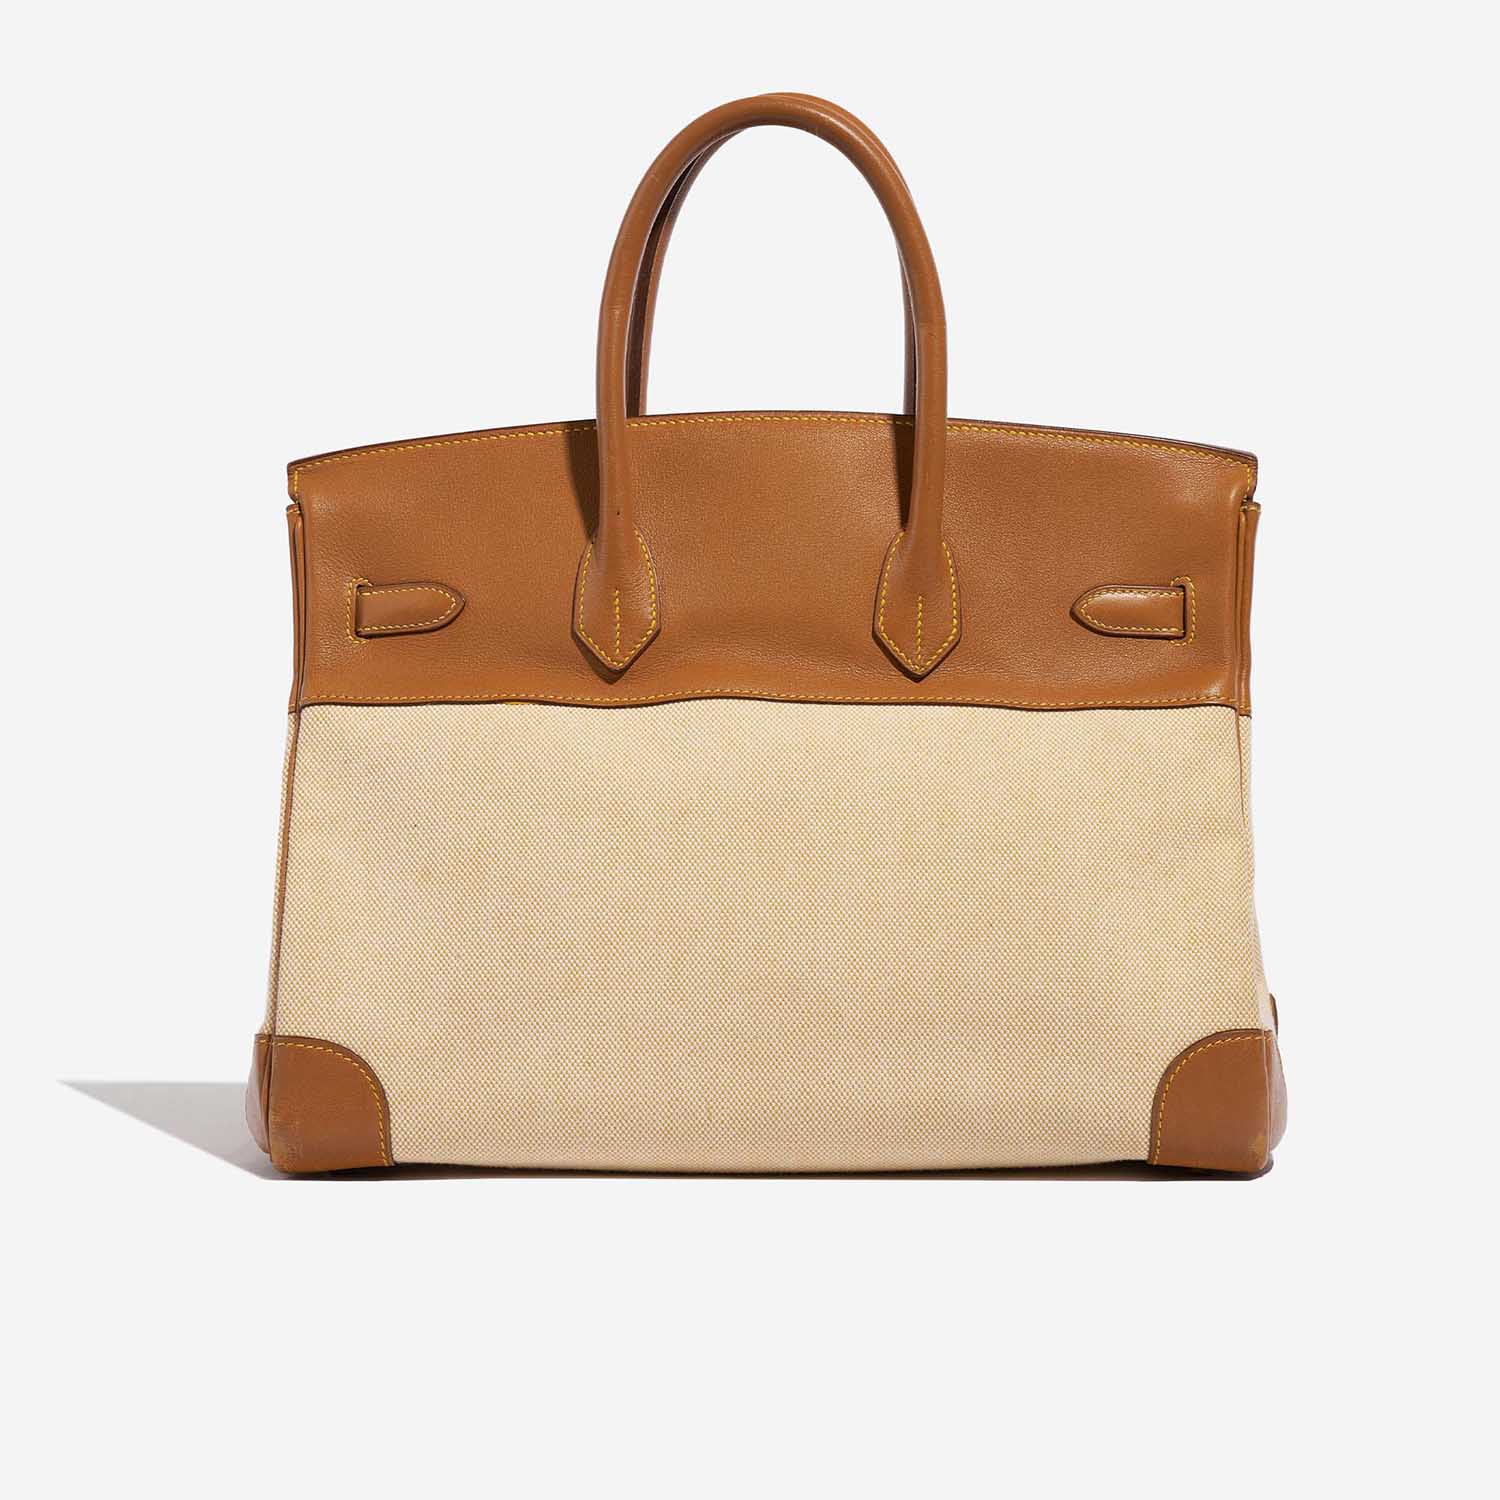 Hermes birkin handbag rouge - Gem